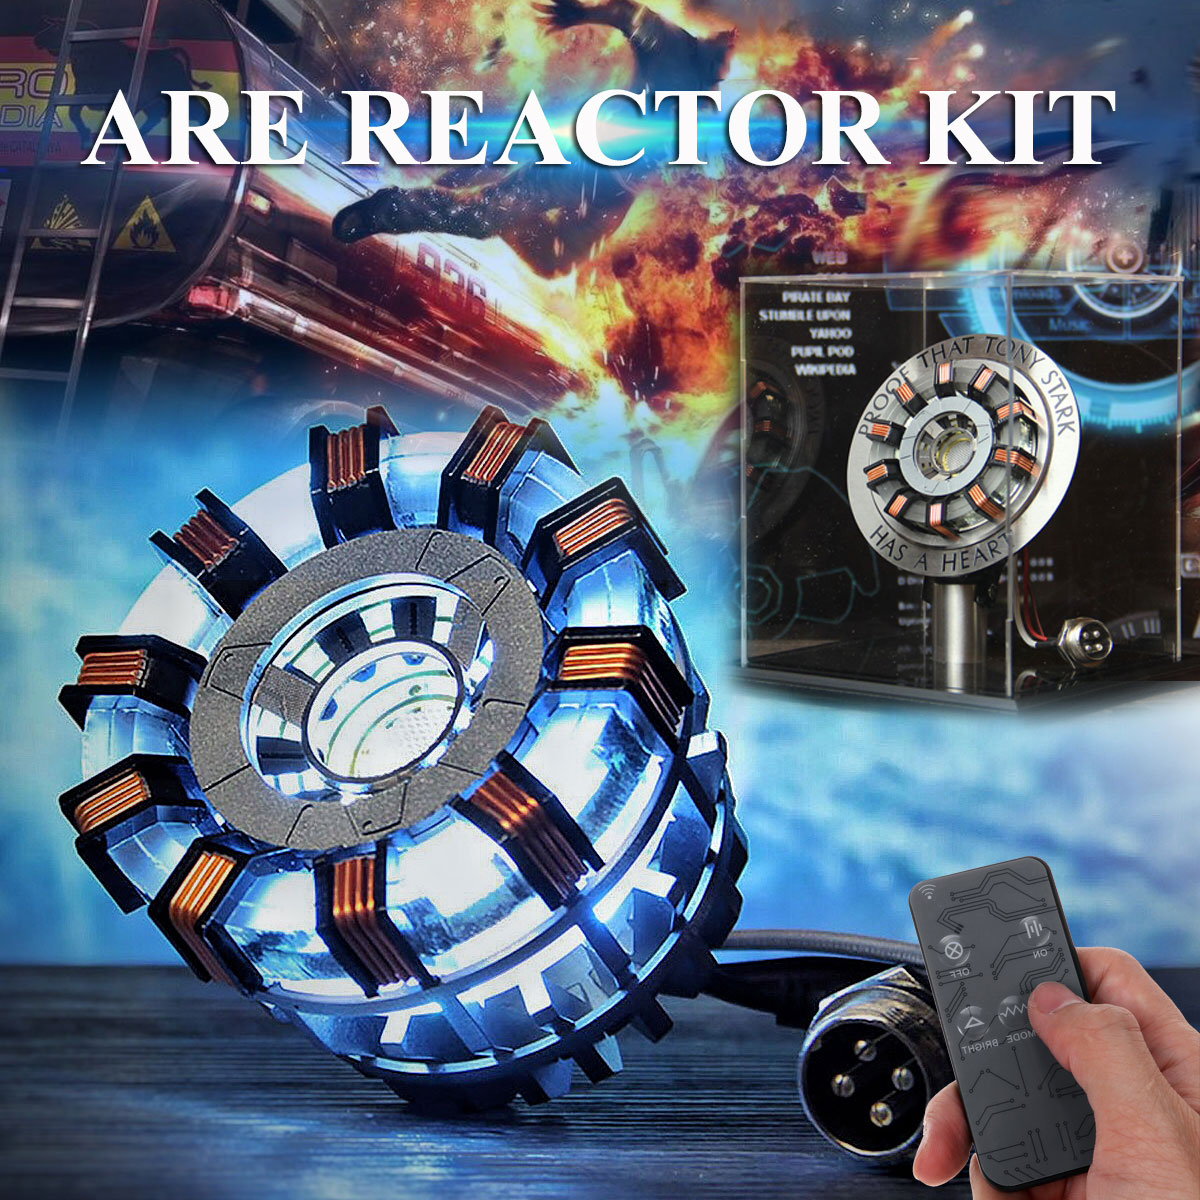 MK2-Remote-Control-Version-DIY-Arc-Reactor-Model-Men-Heart-Kit-LED-Chest-USB-Movie-Props-Light-With--1736340-1